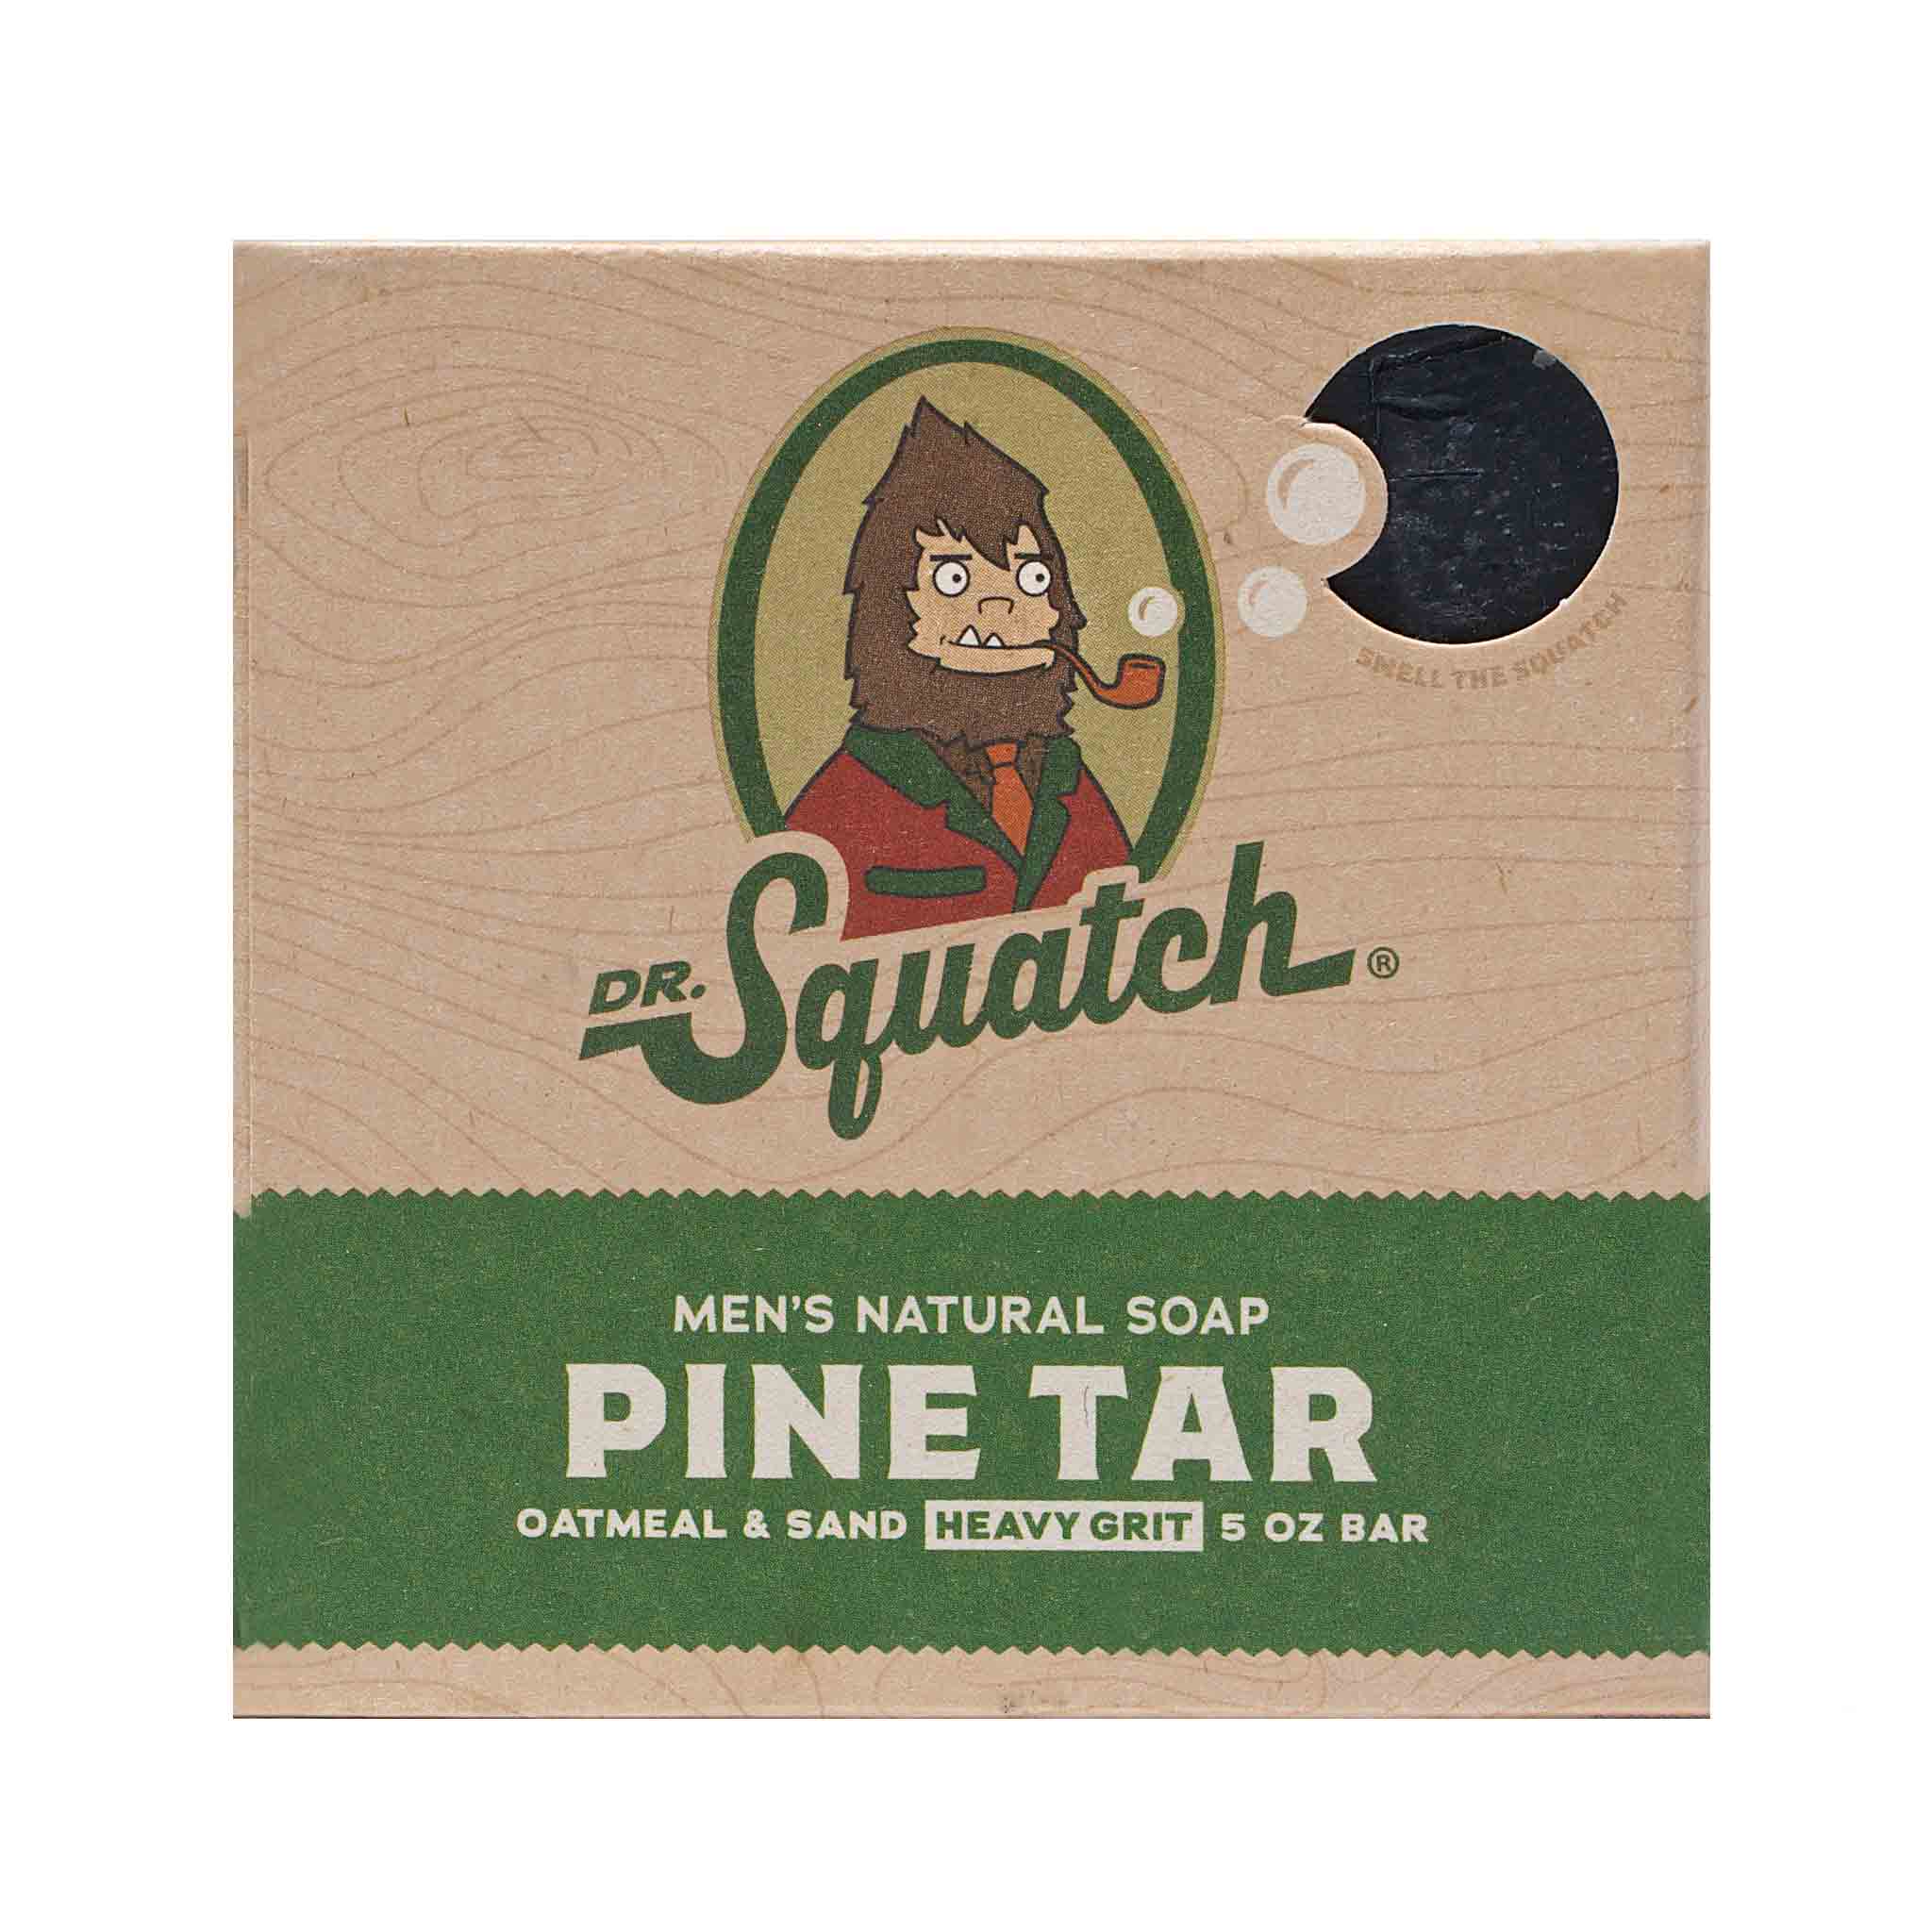 Dr. Squatch Pine Tar Soap - 5oz Free Shipping